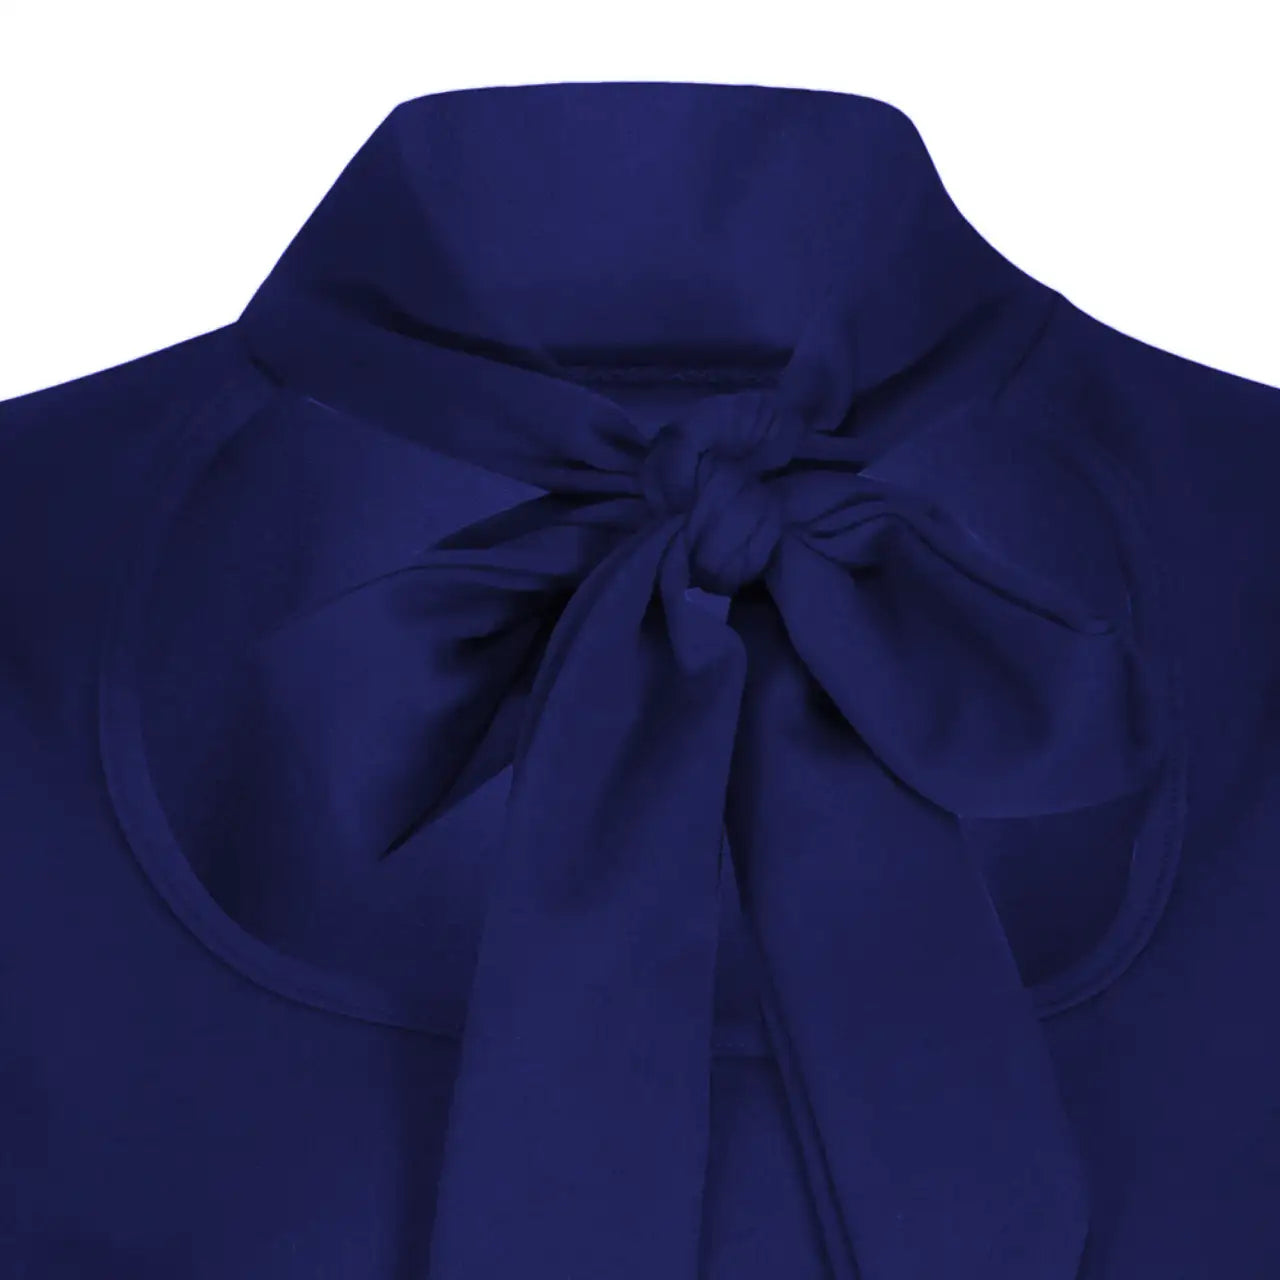 Vintage Navy Blue Puff Sleeve Tie Neck Top